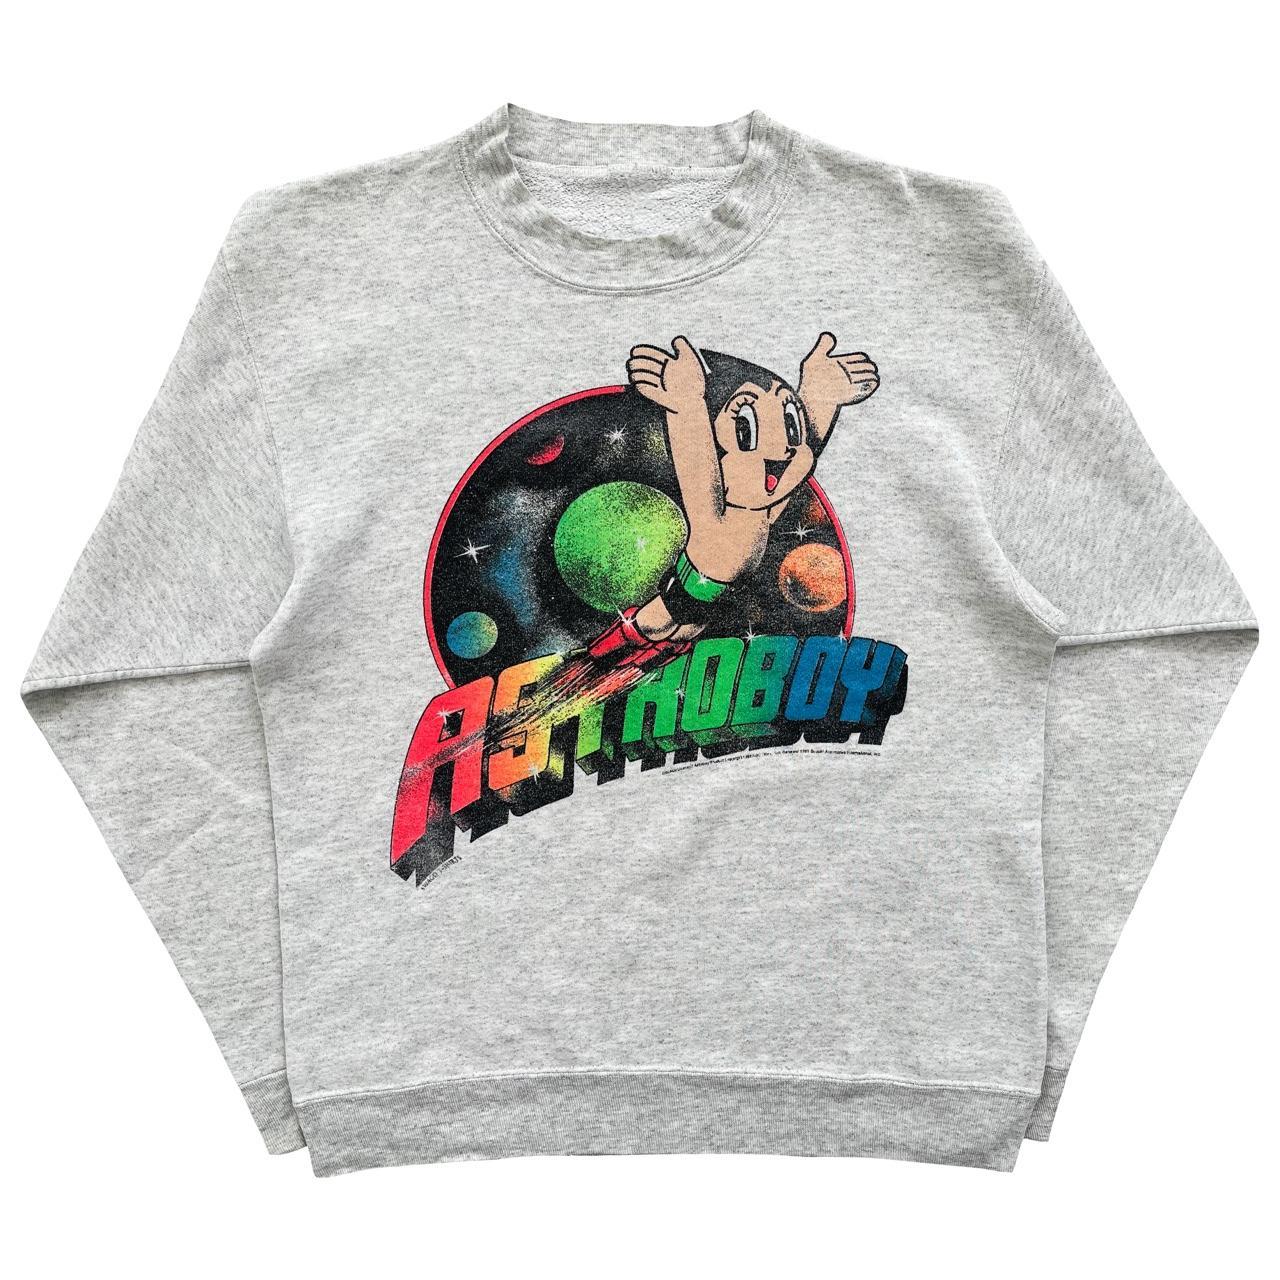 Astro Boy Sweatshirt 1990's